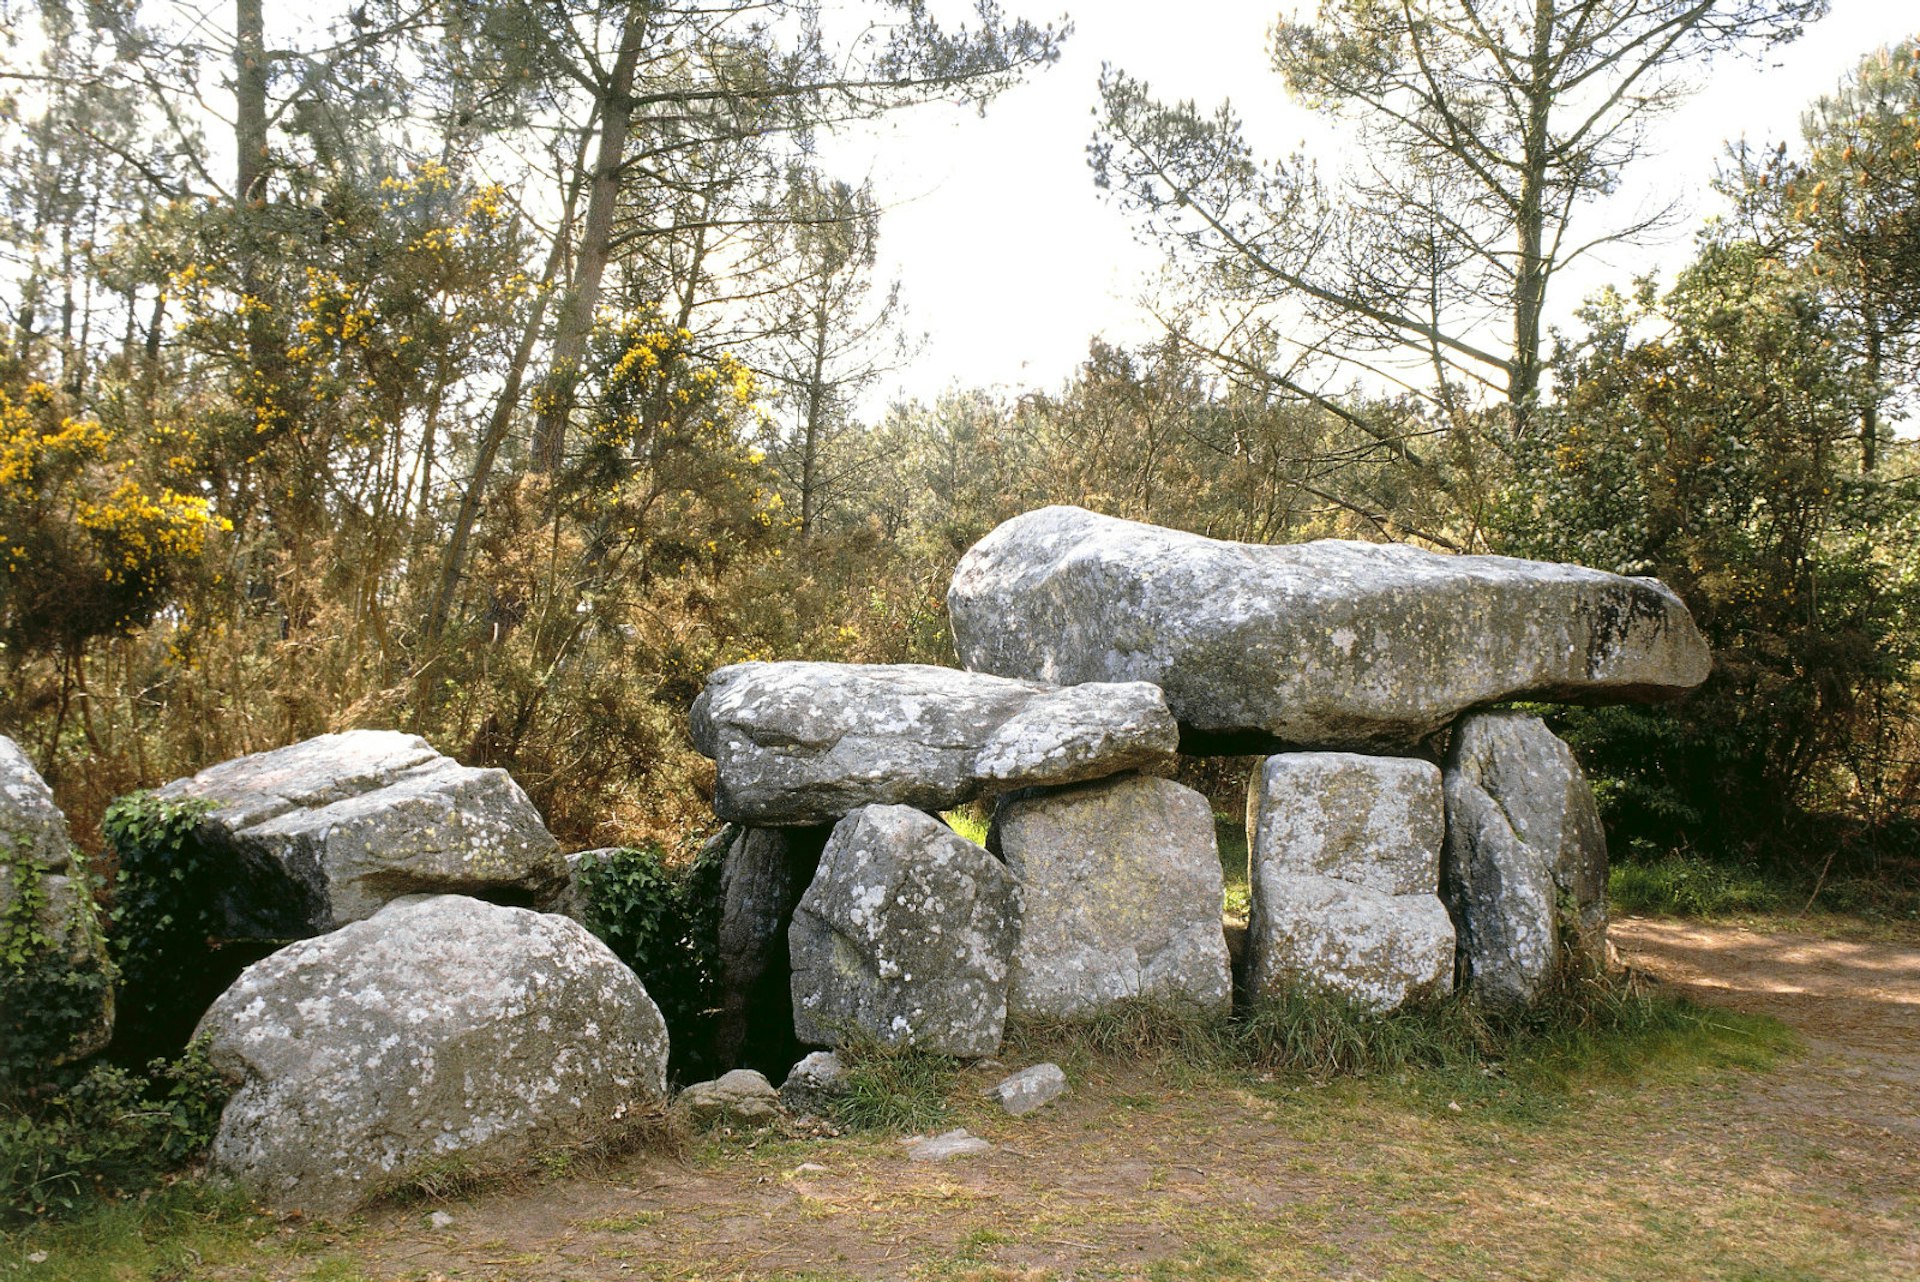 Dolmen de Mané Kerioned is a free alternative to Carnac's main ancient site © DEA G. BERENGO GARDIN / Getty Images